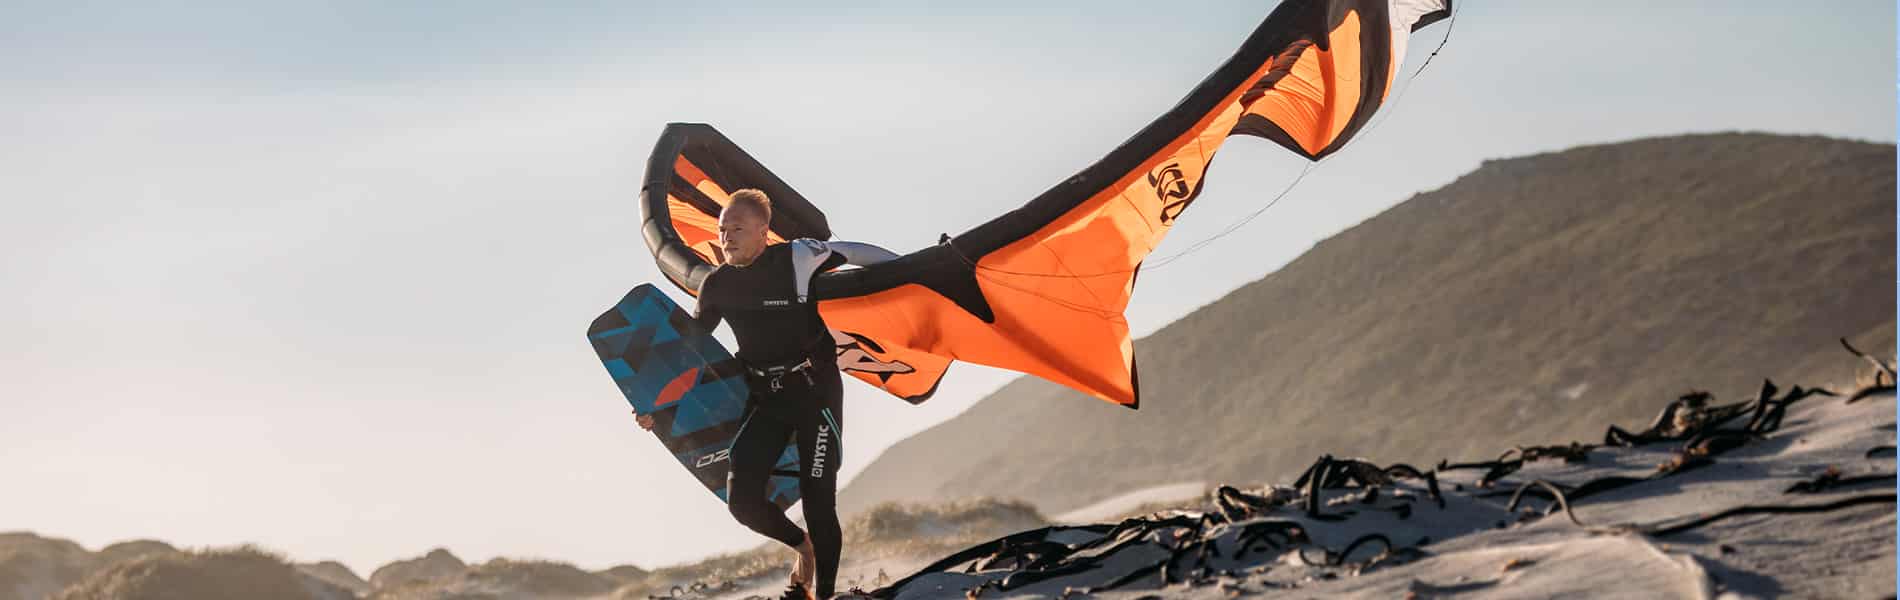 ozone amp kitesurfing kite For Sale Buy Now